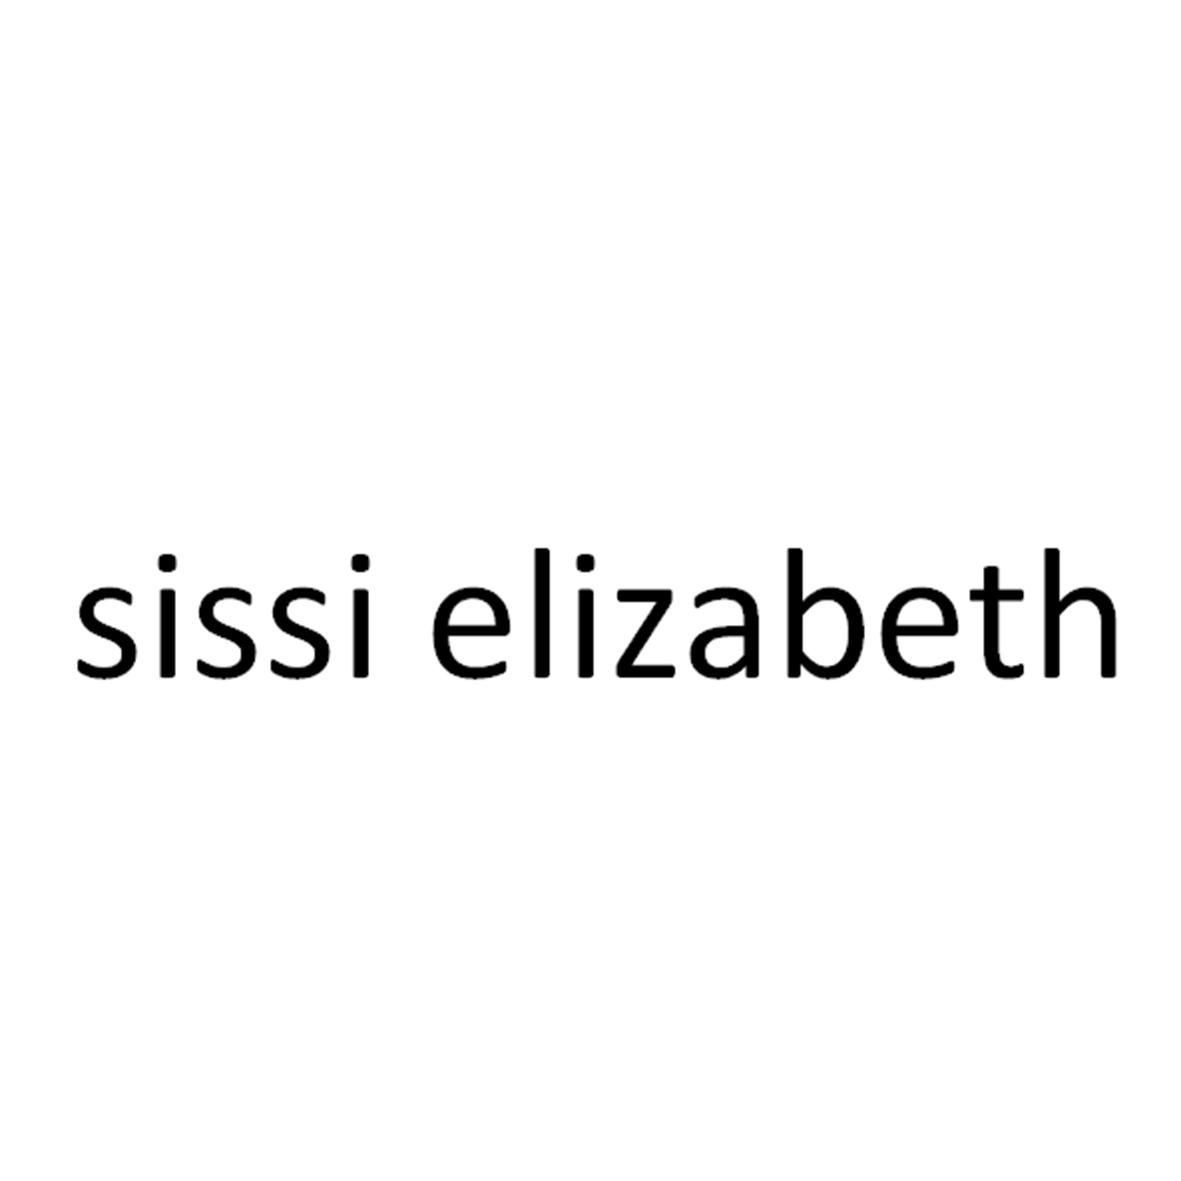 SISSI ELIZABETH商标转让